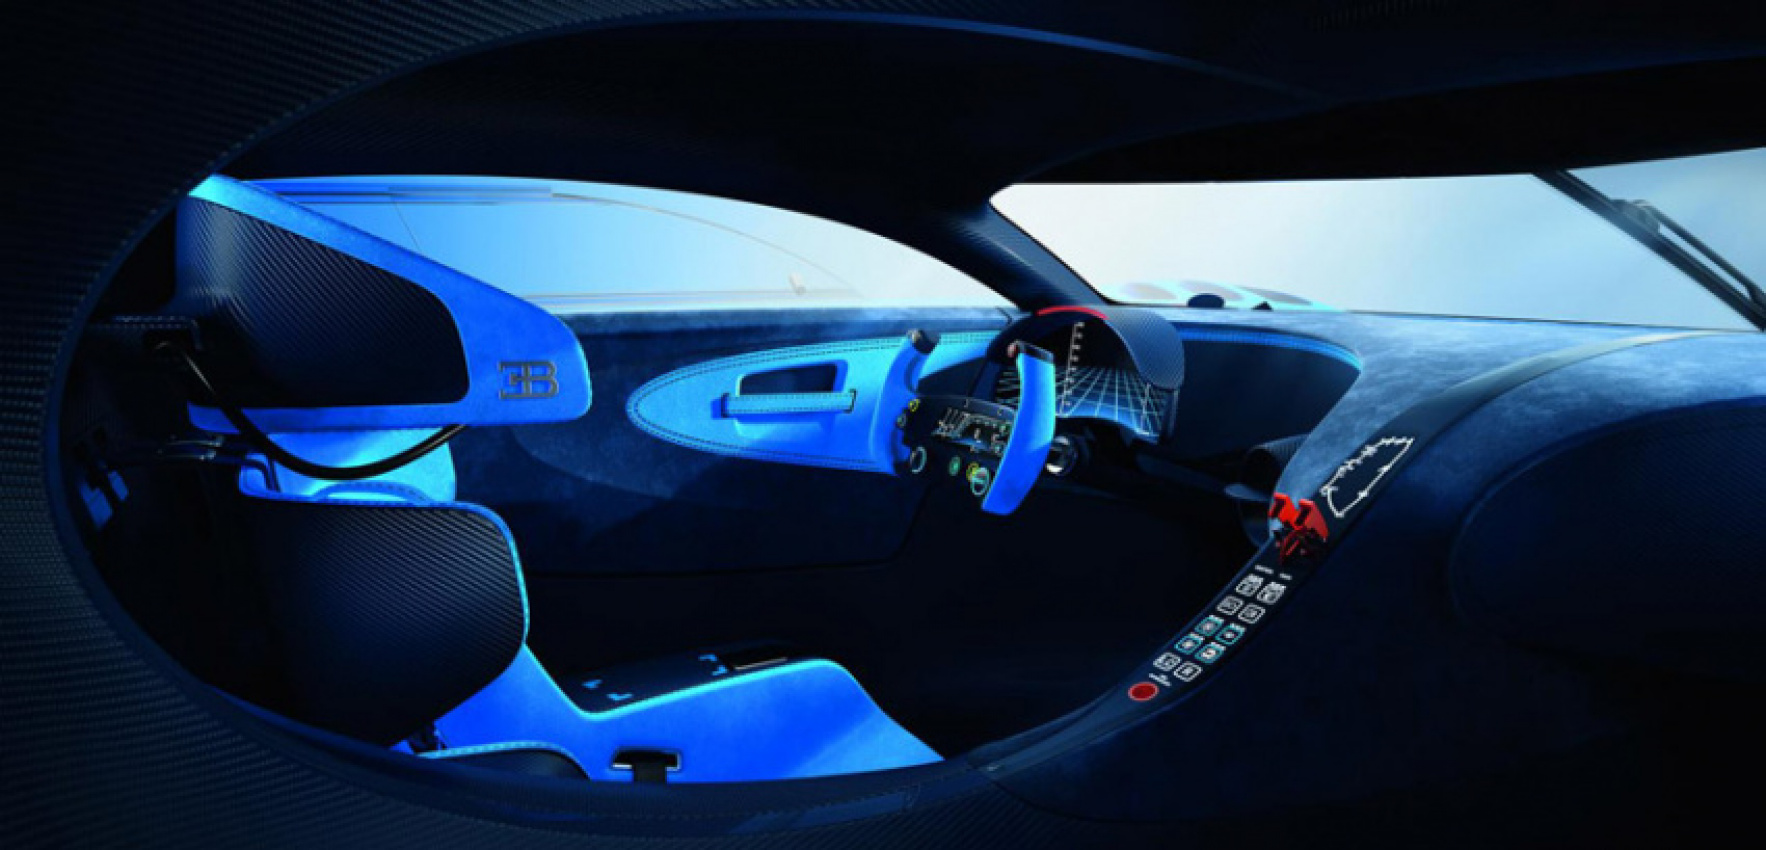 autos, bugatti, cars, 2015 bugatti vision gran turismo concept is here and it is real!